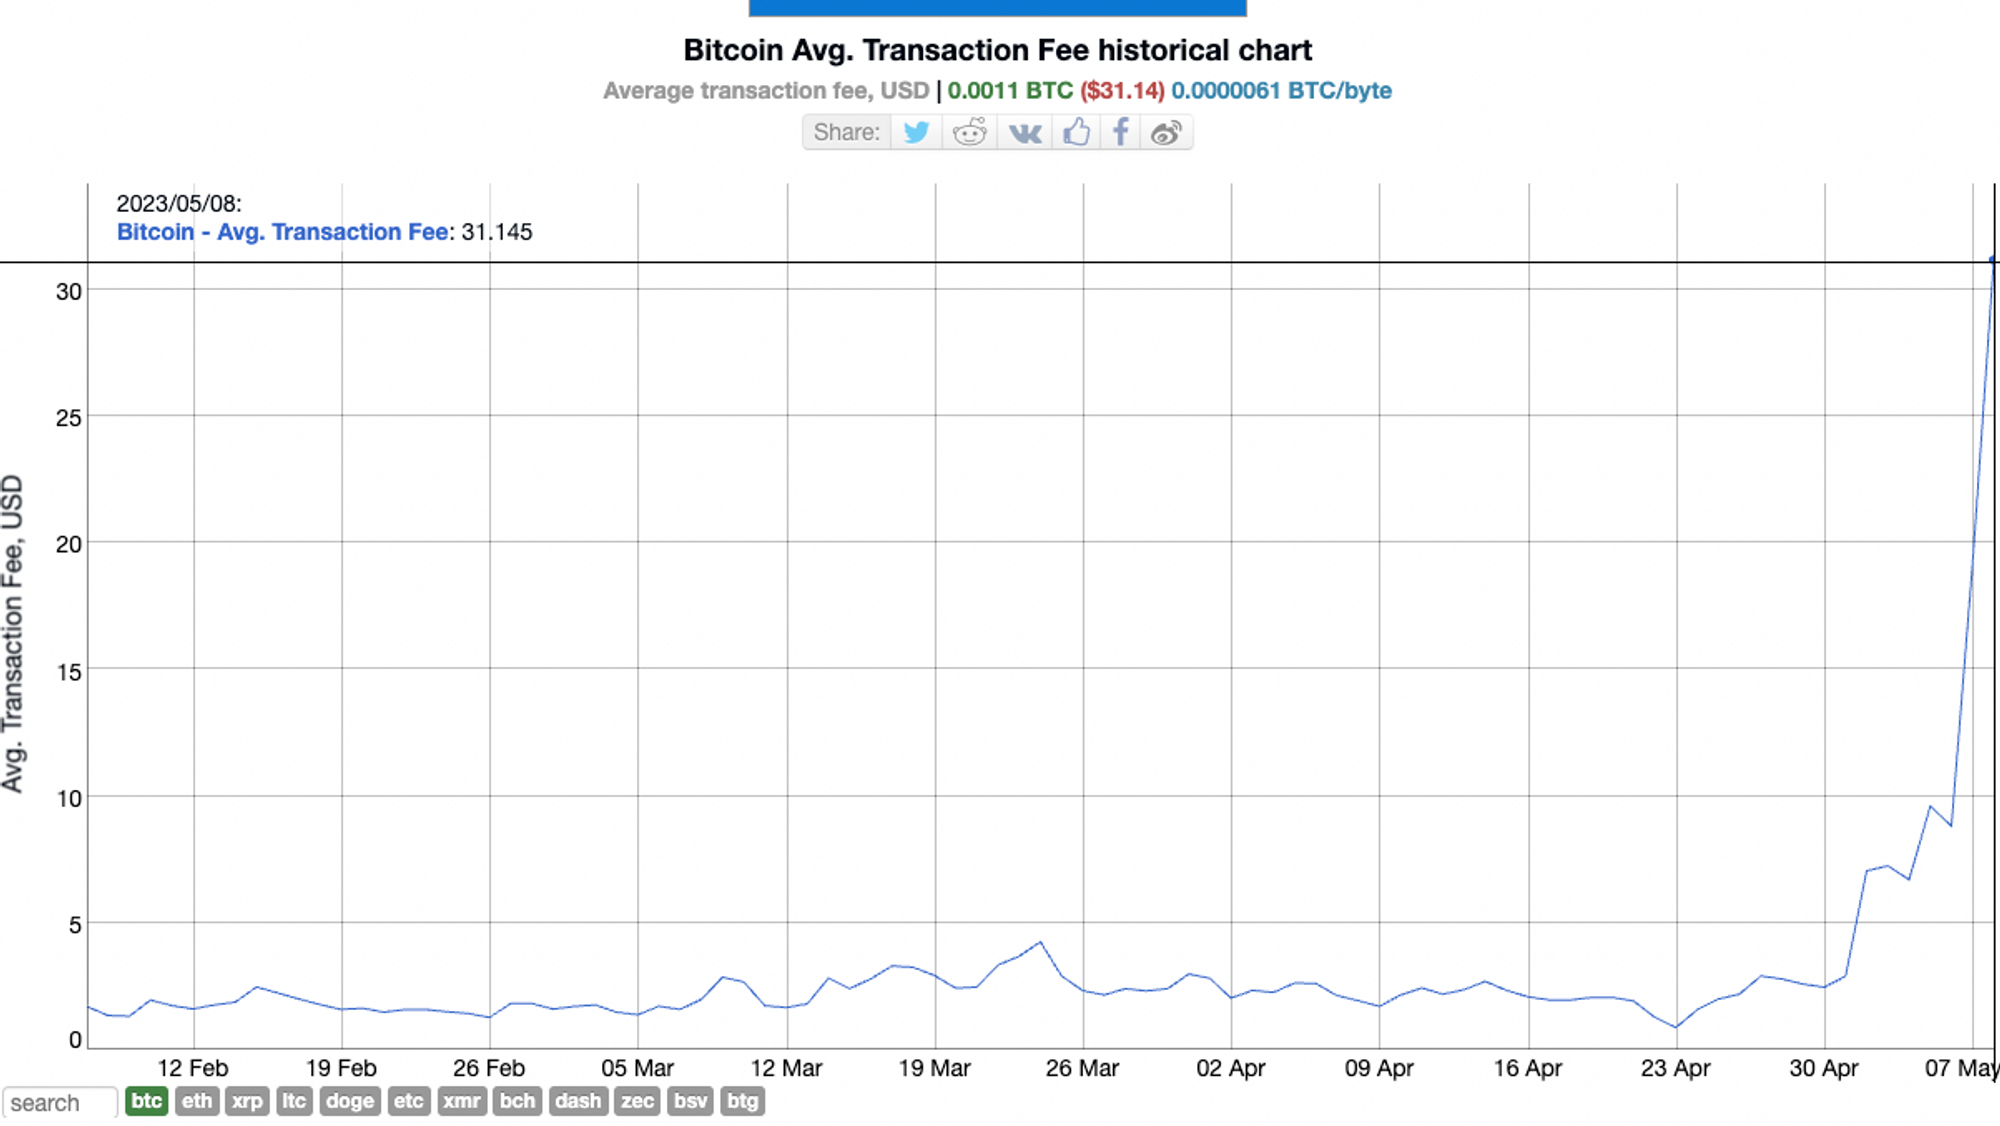 source: https://bitinfocharts.com/zh/comparison/bitcoin-transactionfees.html#3m